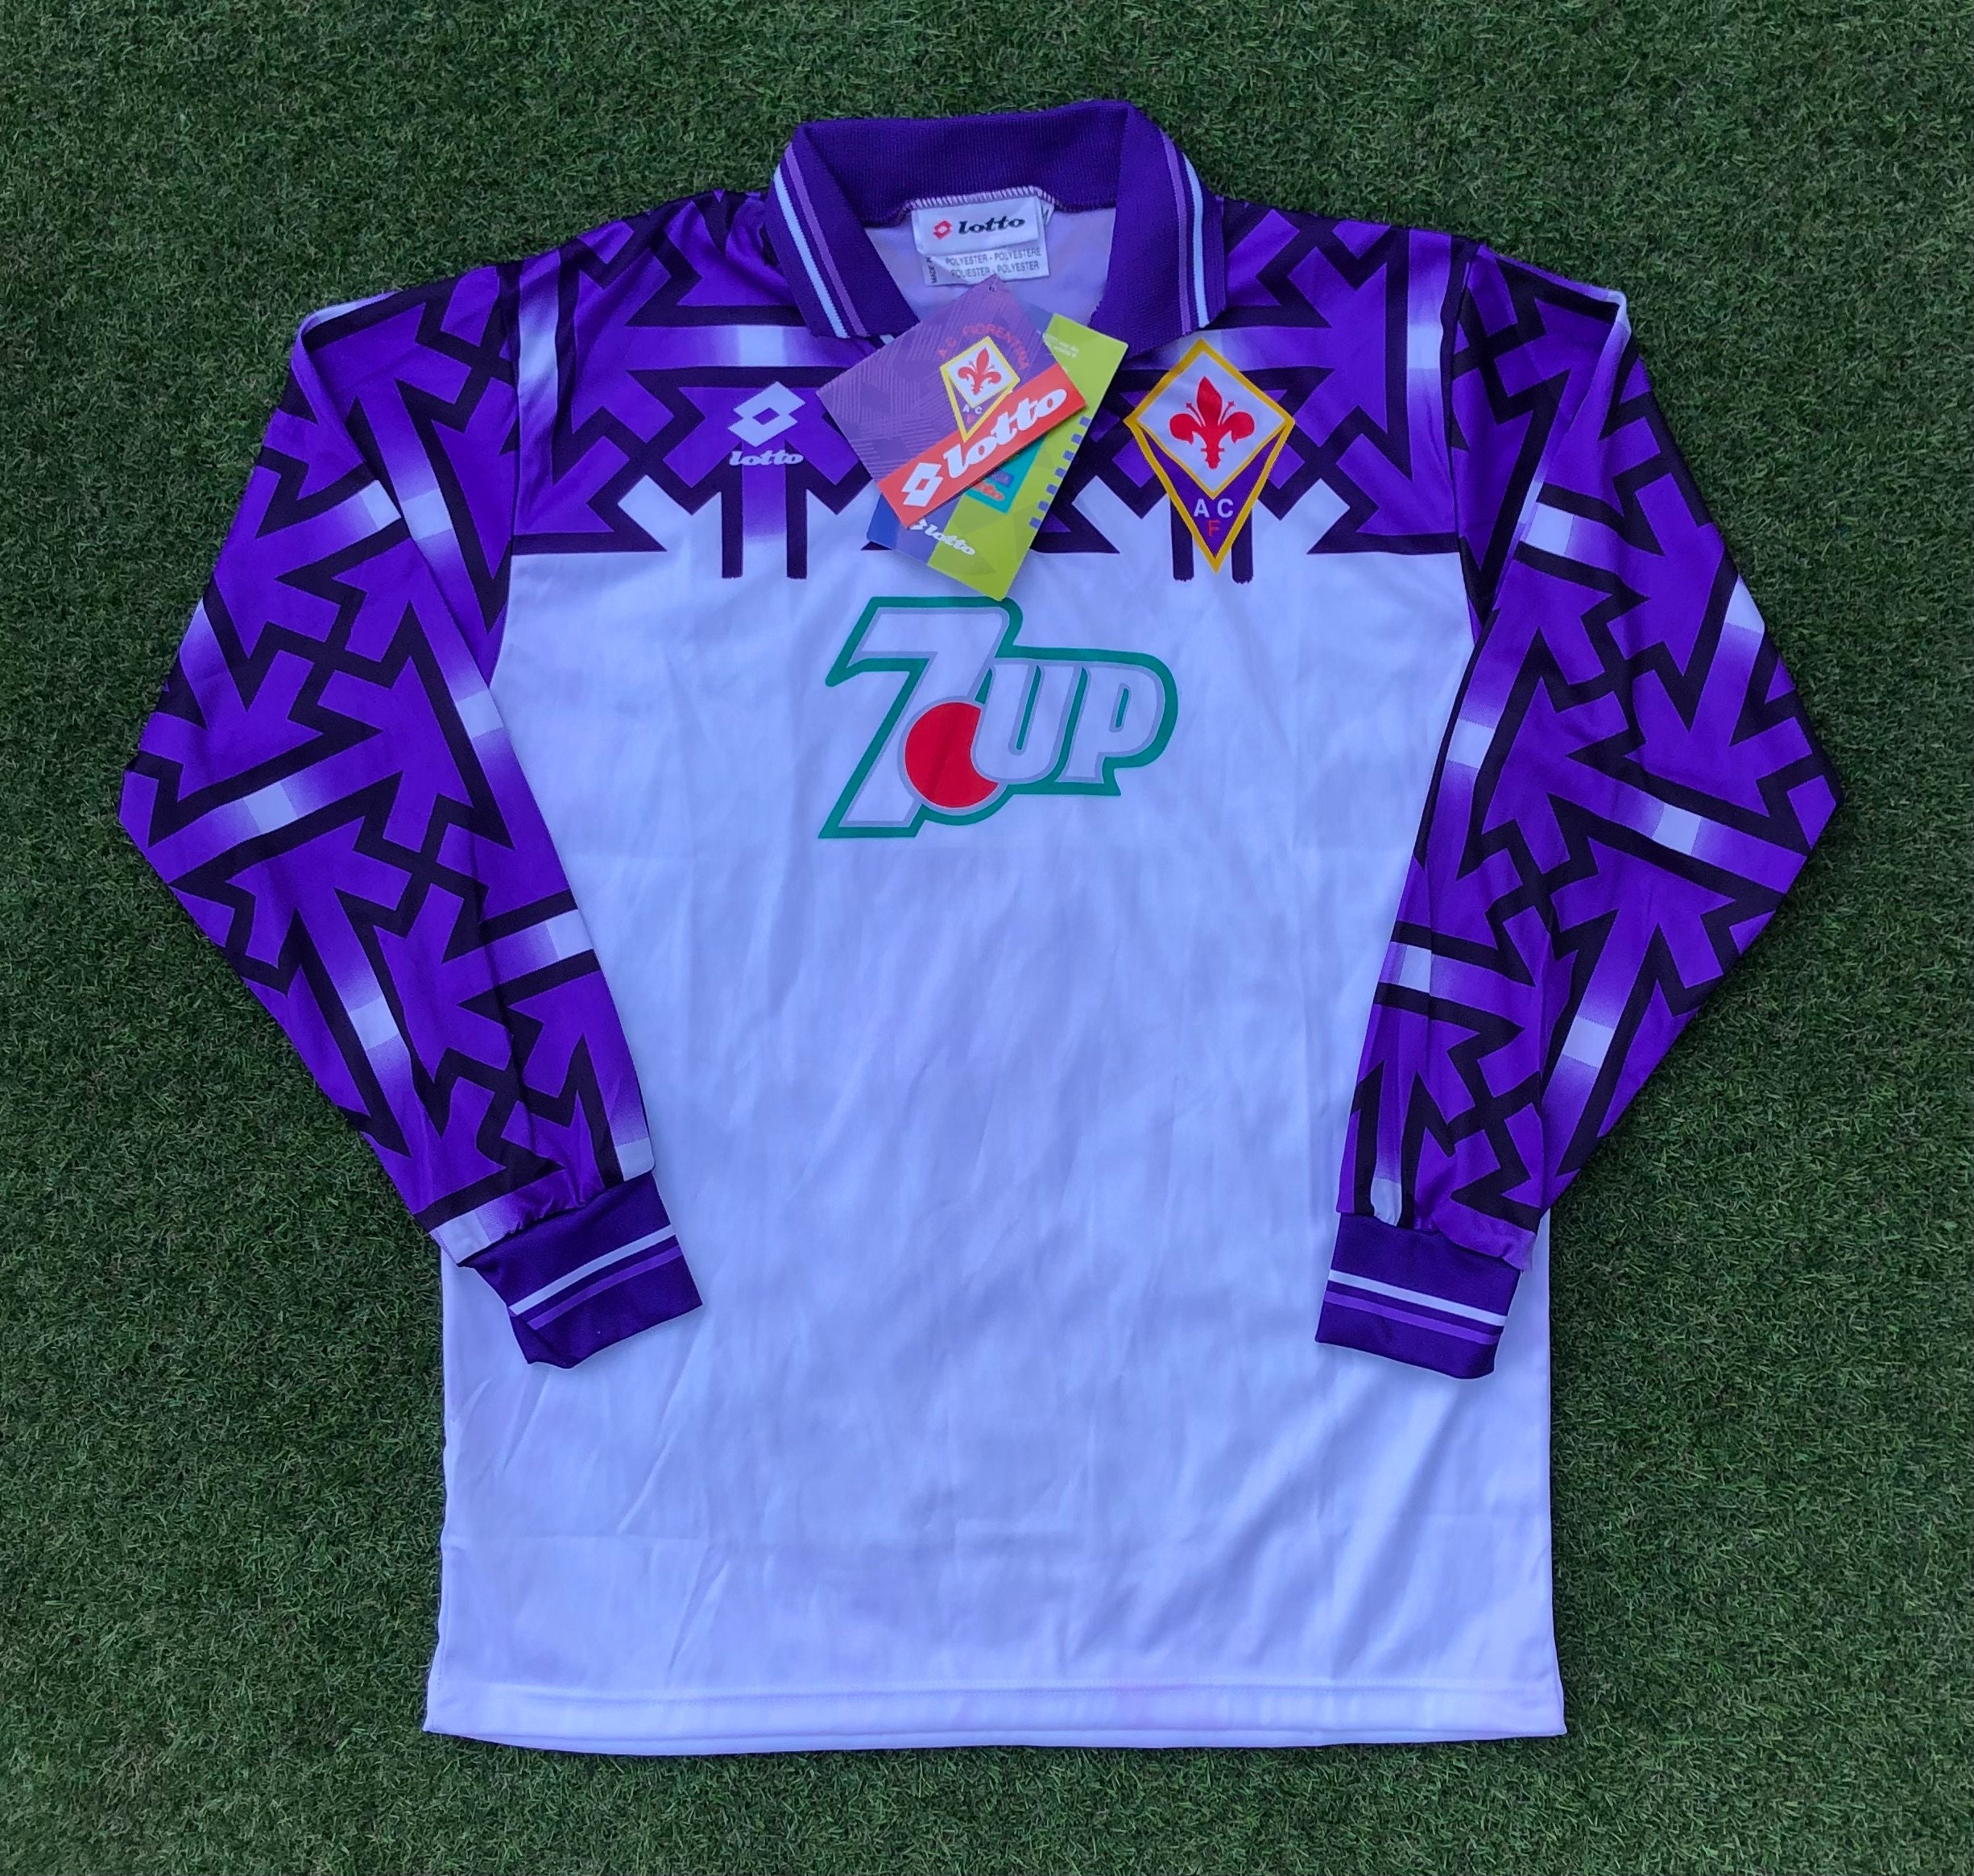 ACF Fiorentina Italy Italia Serie A Europe Soccer Men's T-Shirt